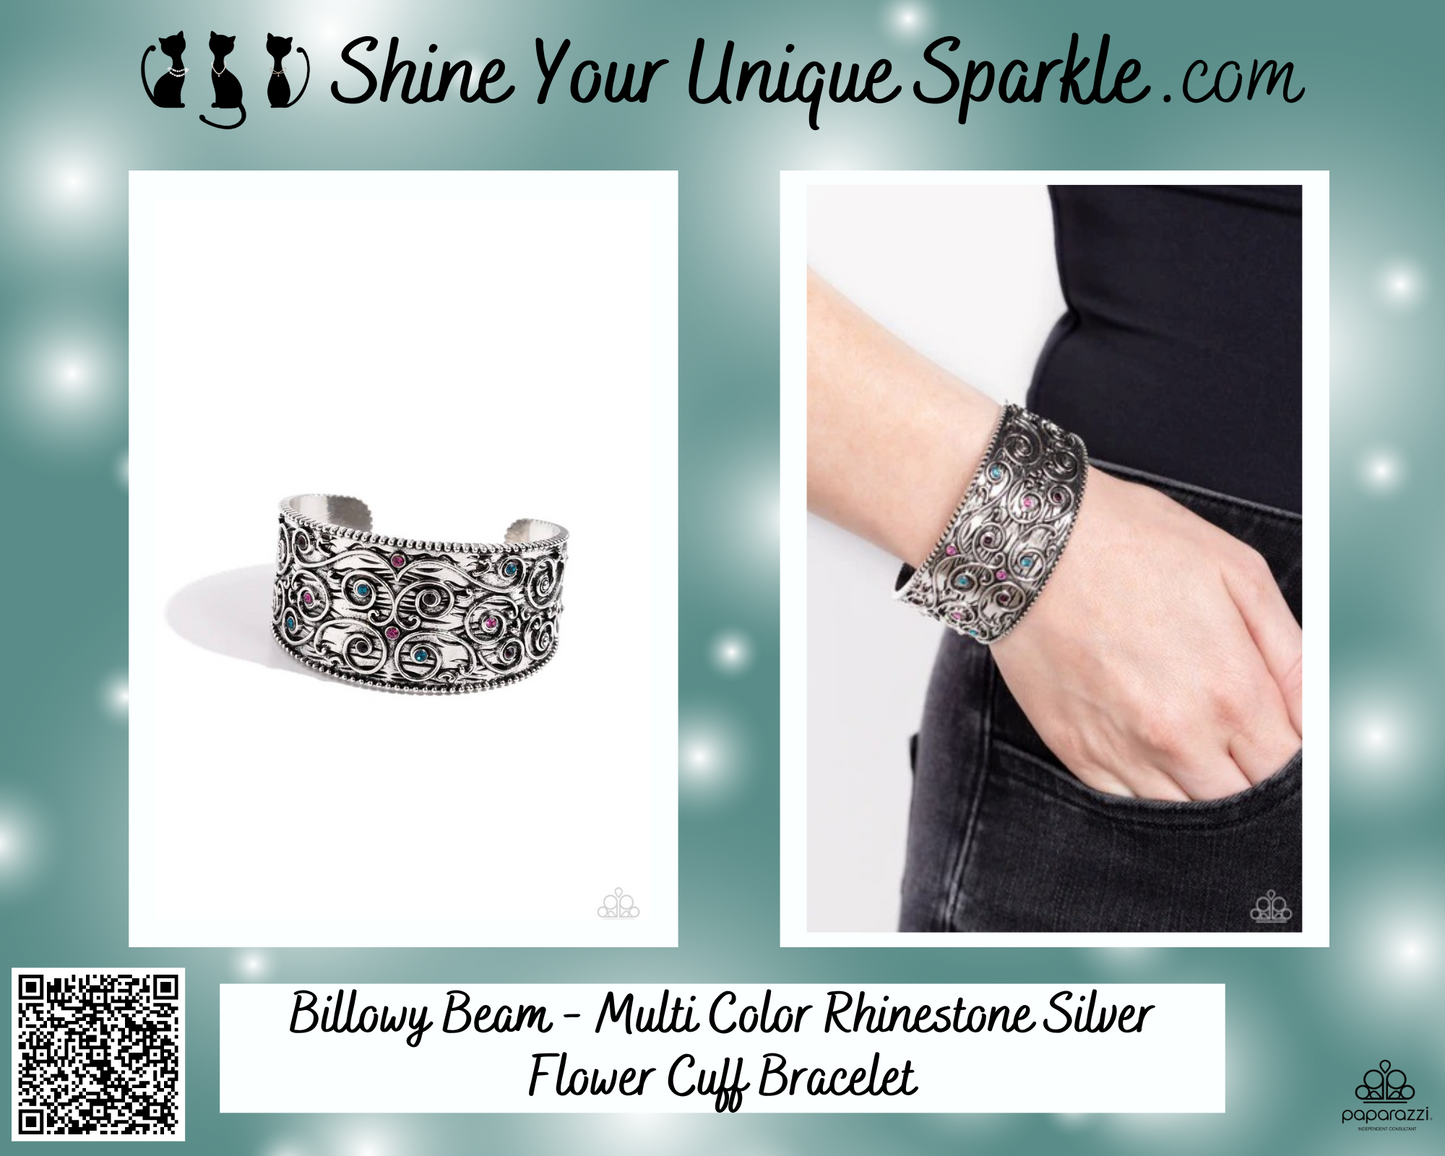 Billowy Beam - Multi Color Rhinestone Silver Flower Cuff Bracelet